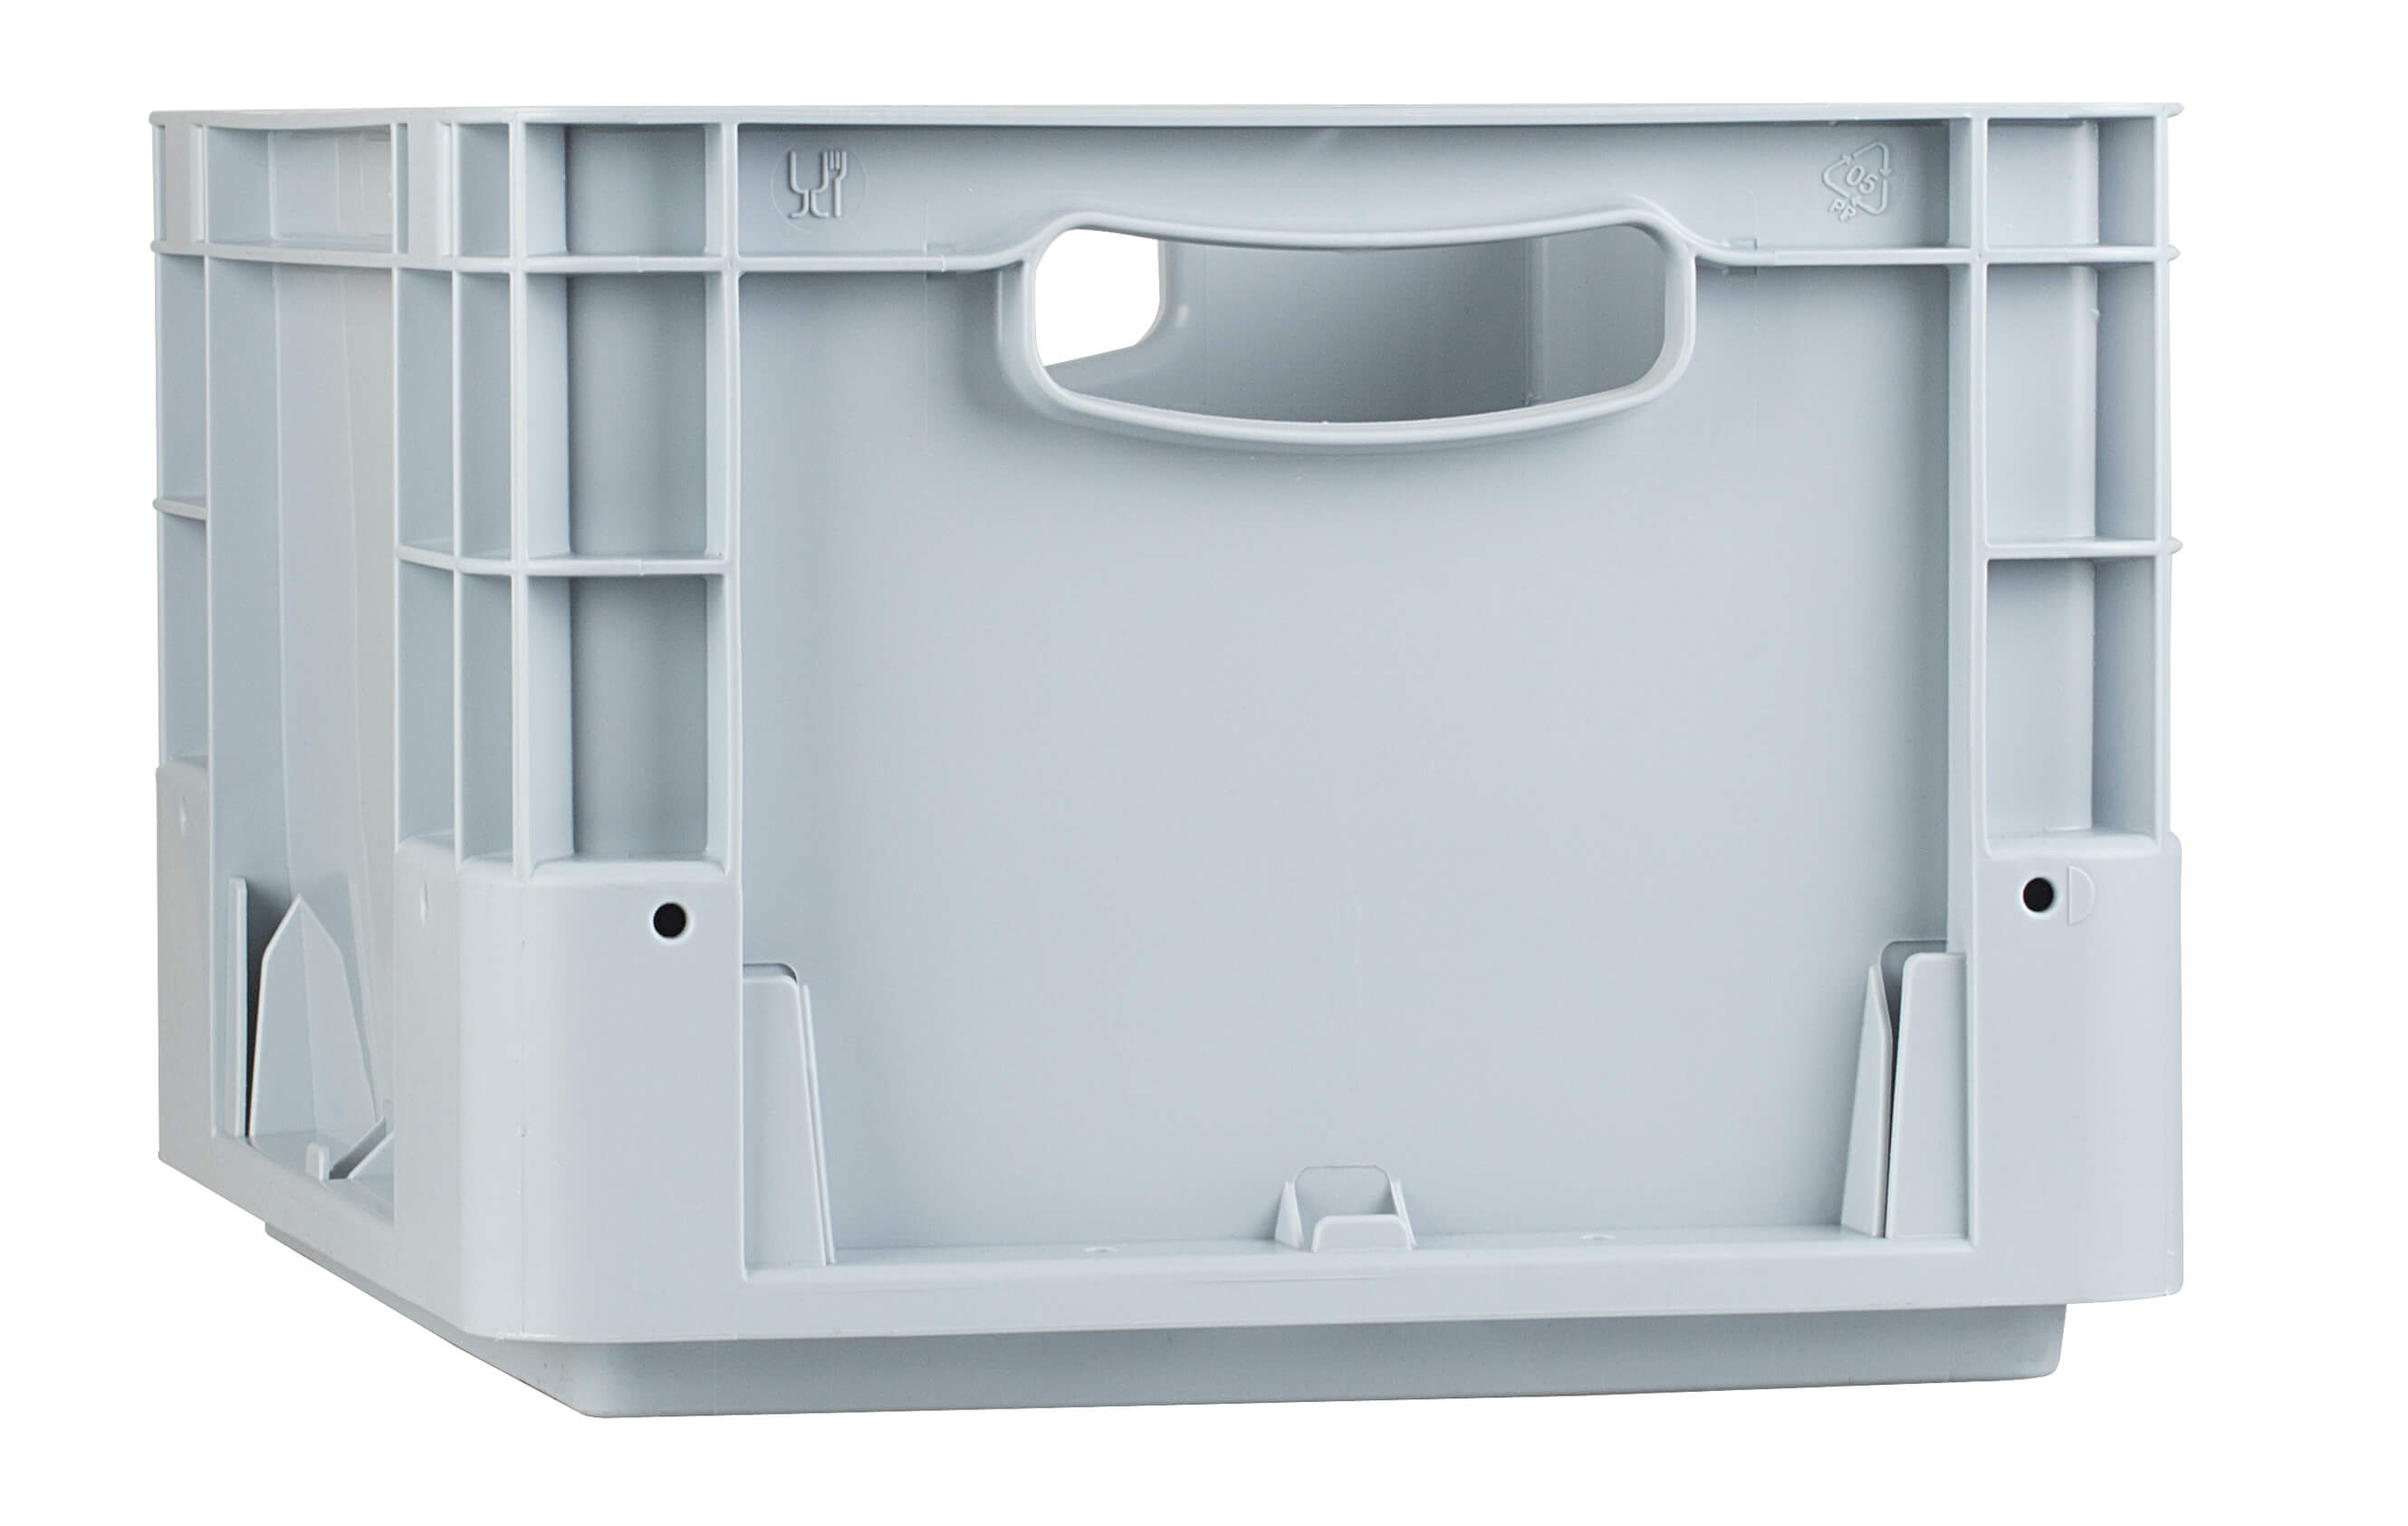 Transport crate, grey - plastic